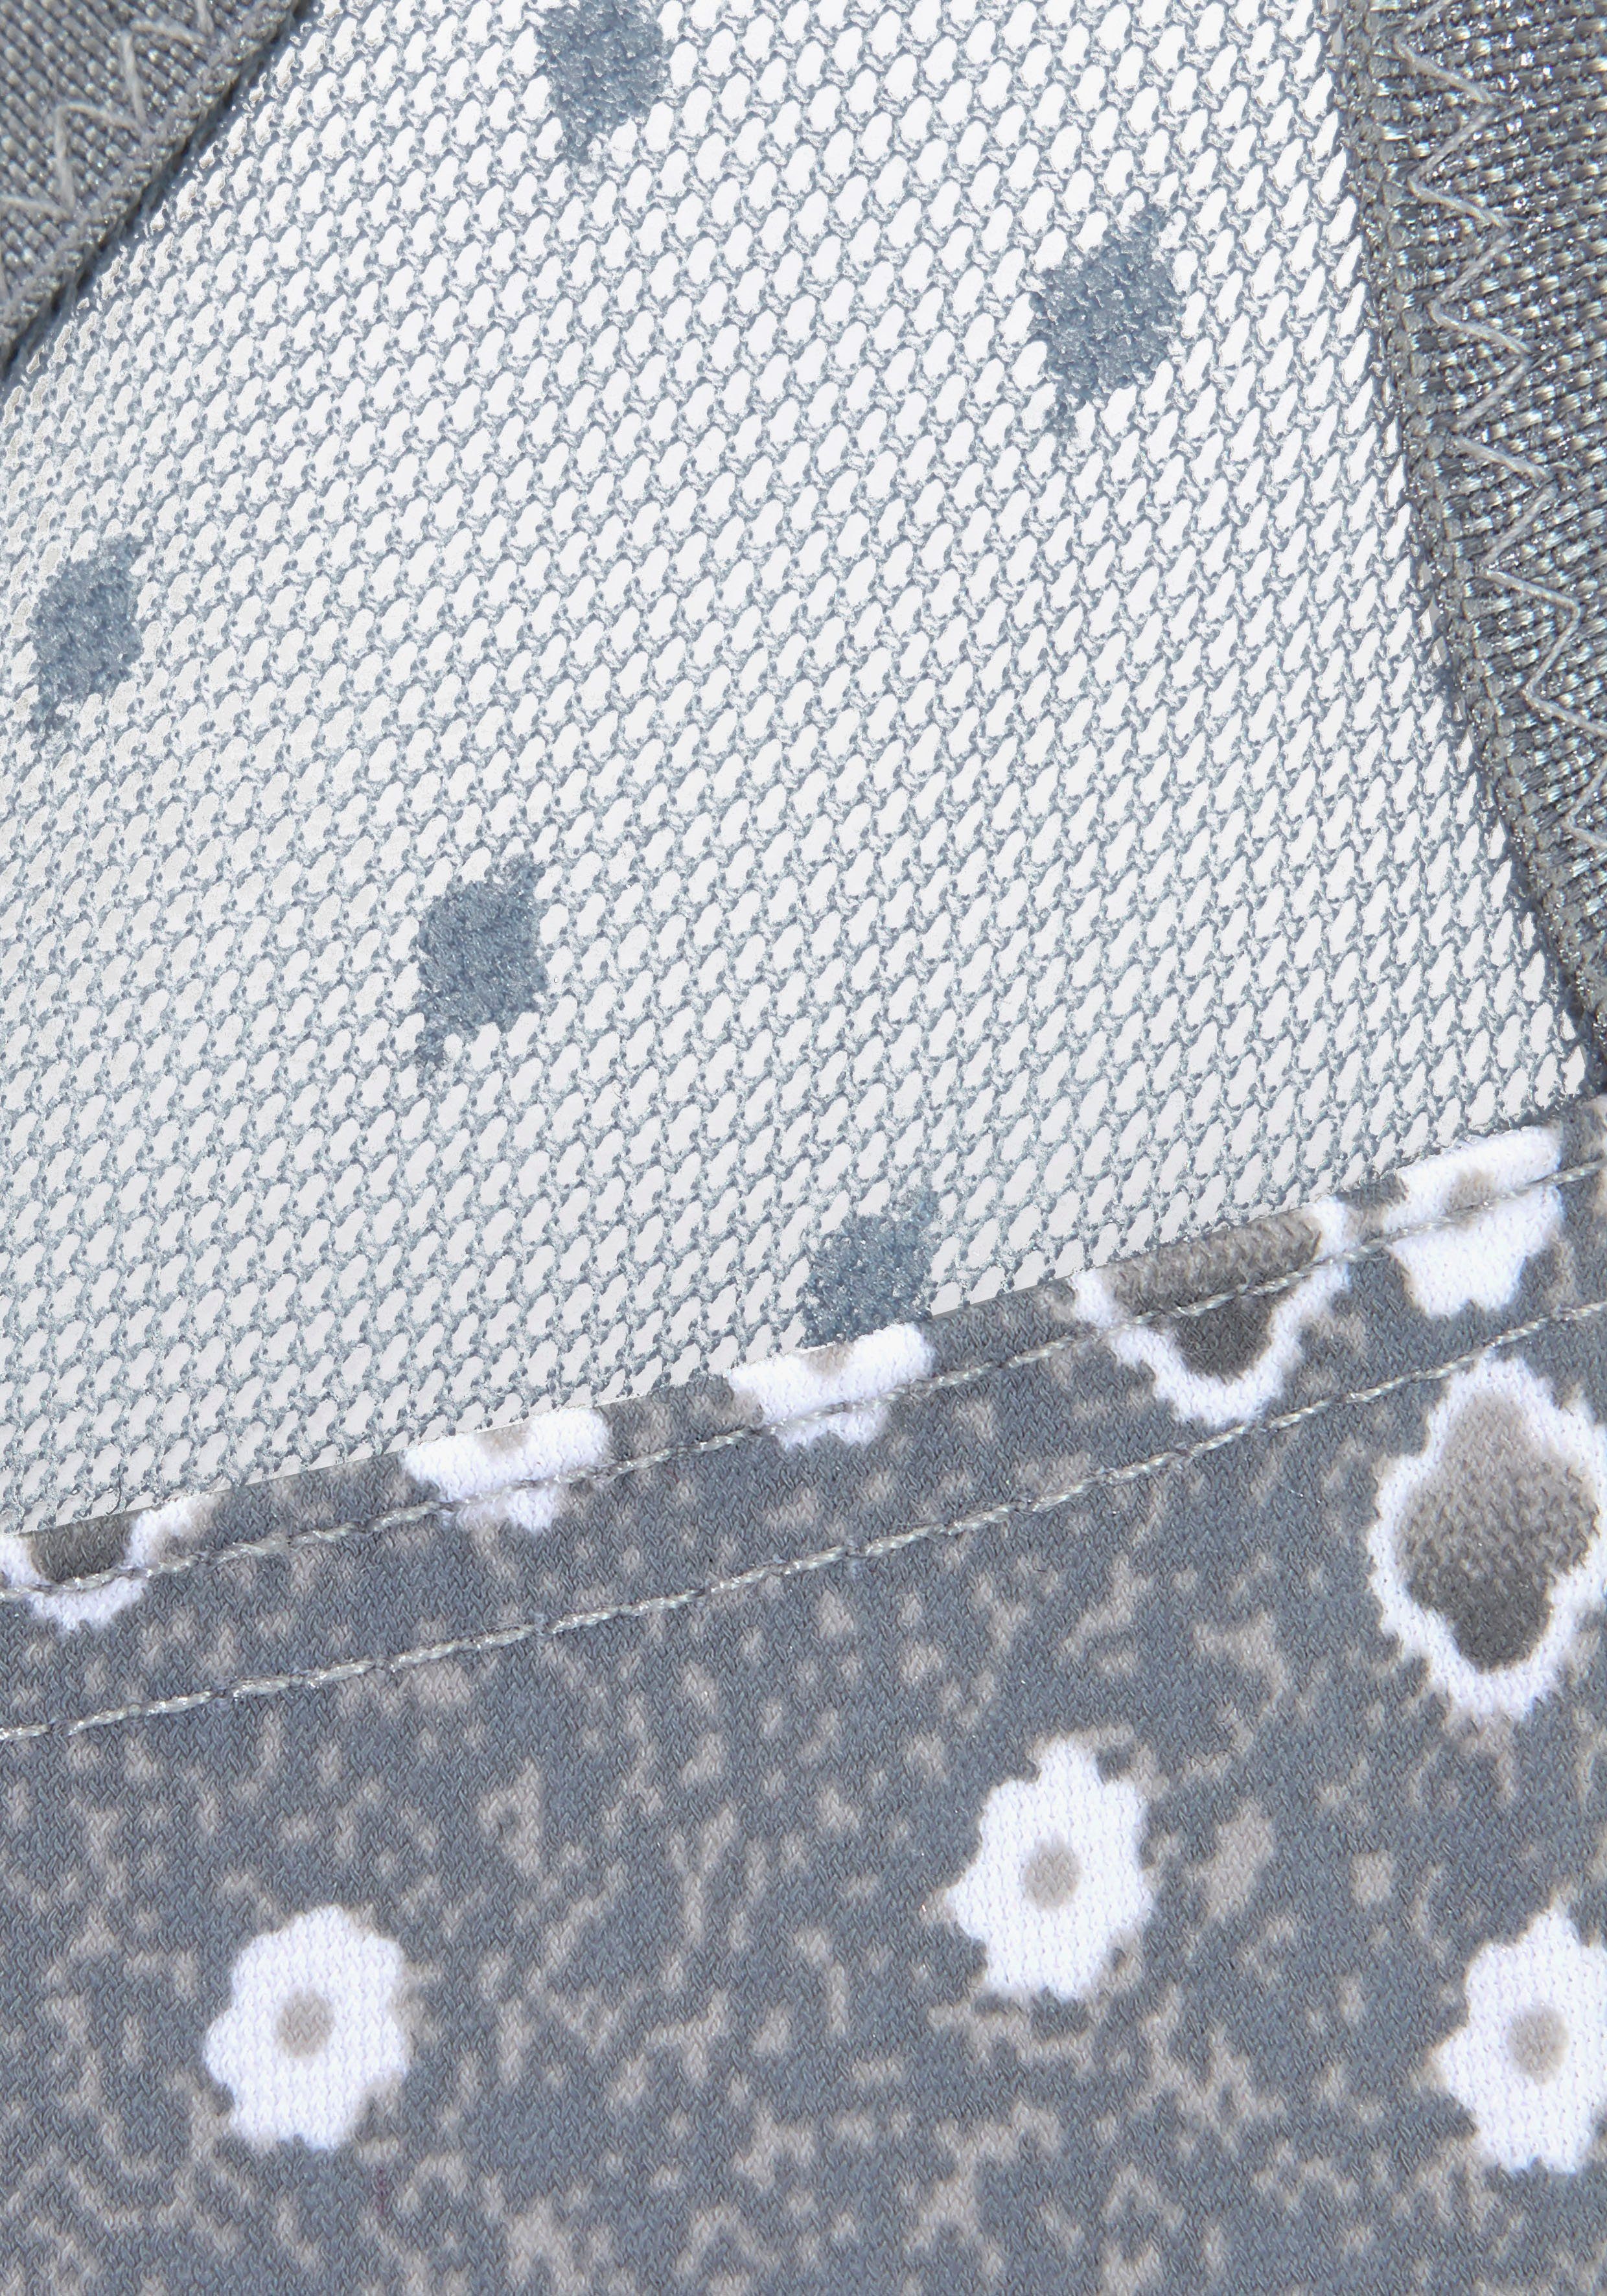 mit Bügel Dessous Obercup, Nuance im Basic Minimizer-BH transparentem und grau-bedruckt Tüll leicht